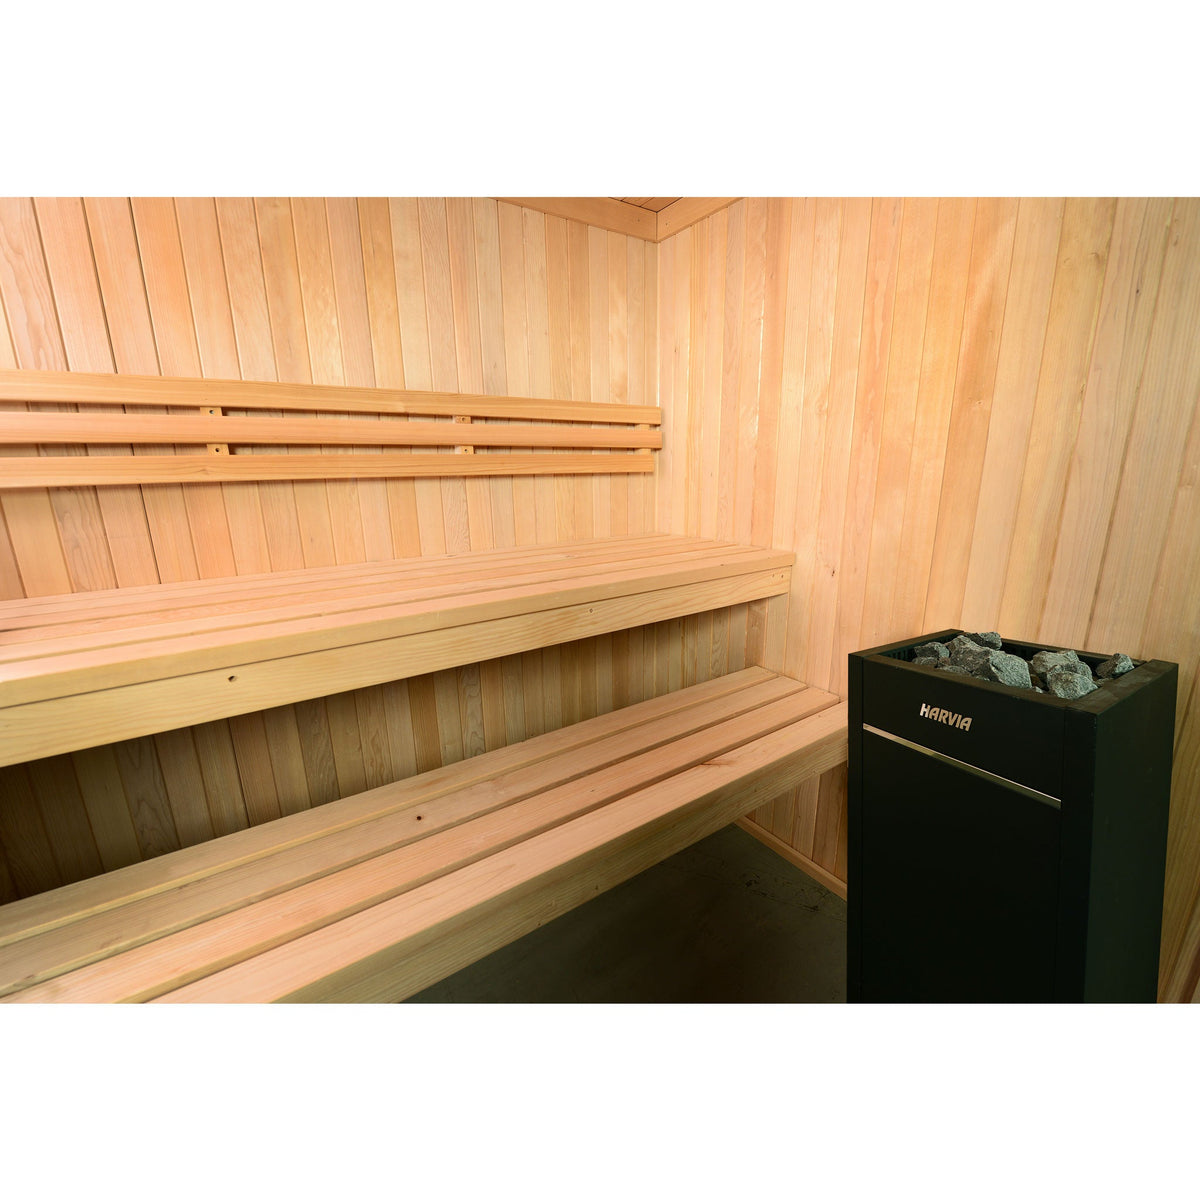 Almost Heaven Oasis 4-Person Indoor Sauna-Traditional Saunas-Nordica Sauna